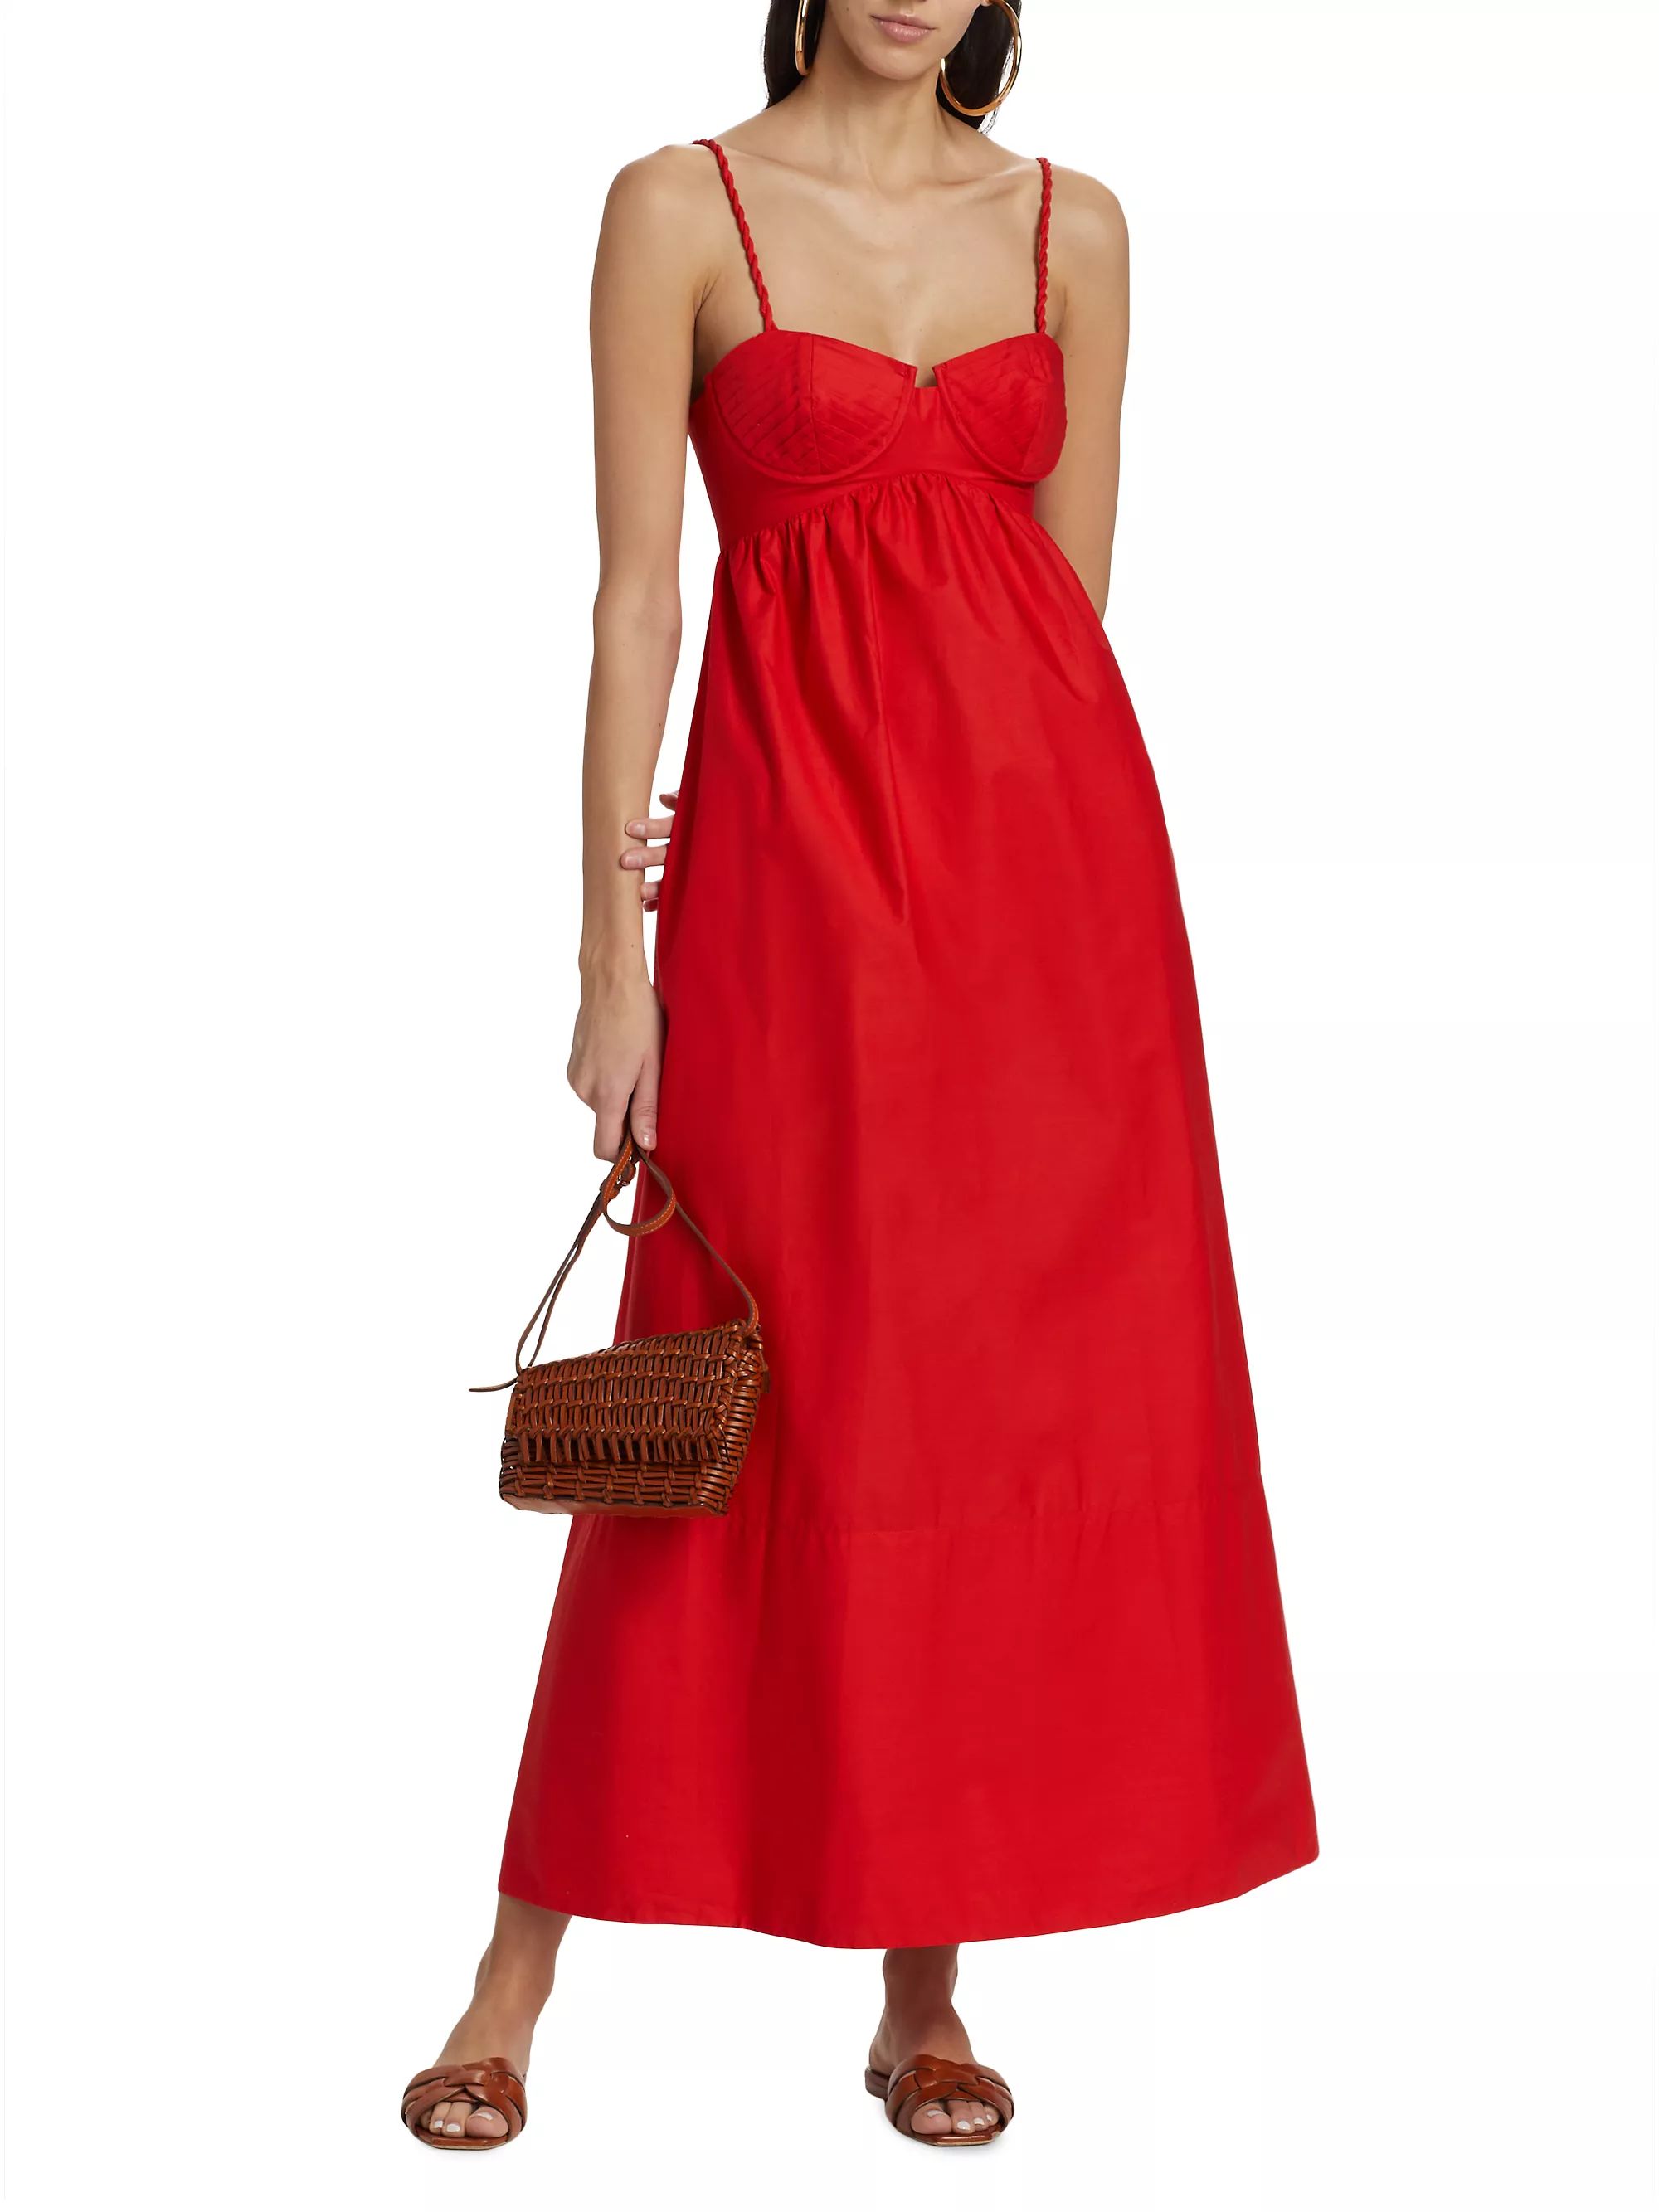 DressesMaxiOnly at SaksFarm RioCotton Maxi DressRating: 3 out of 5 stars1$245 | Saks Fifth Avenue